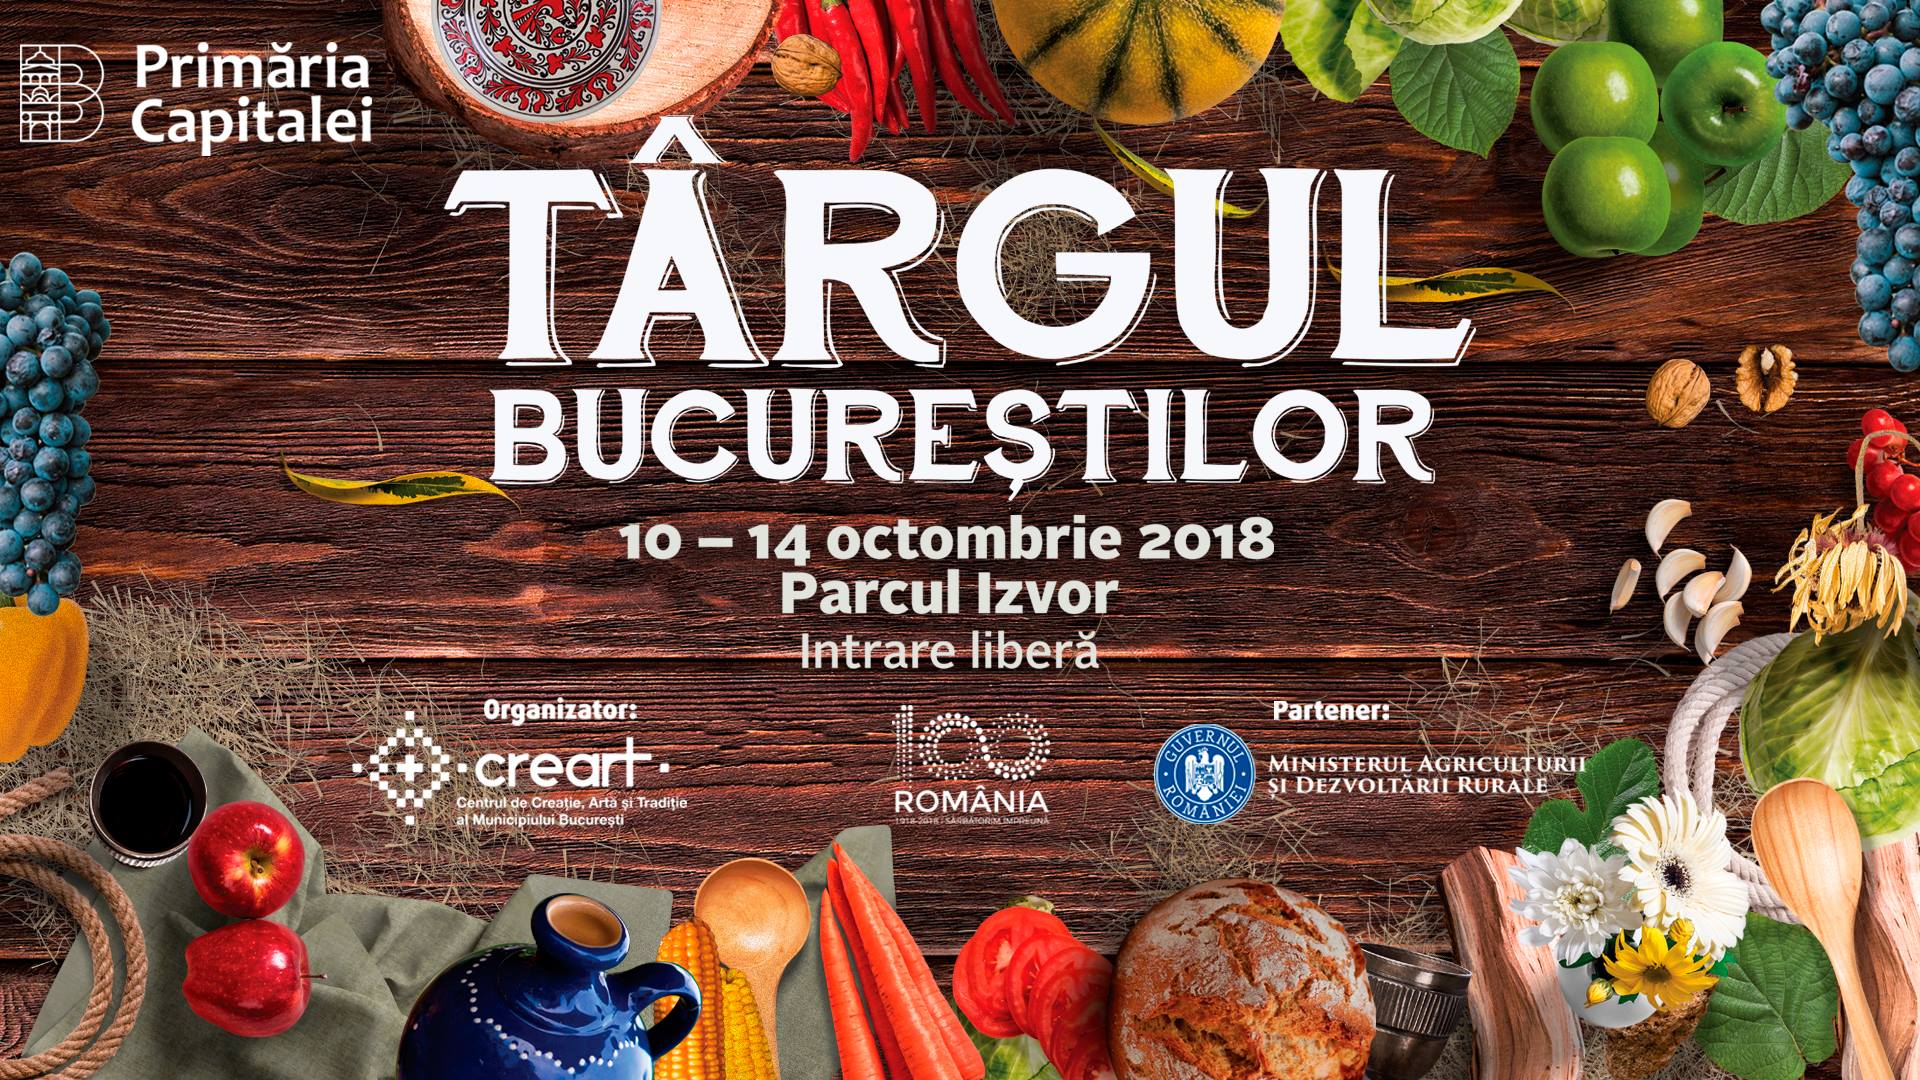 Targul Bucurestilor 2018